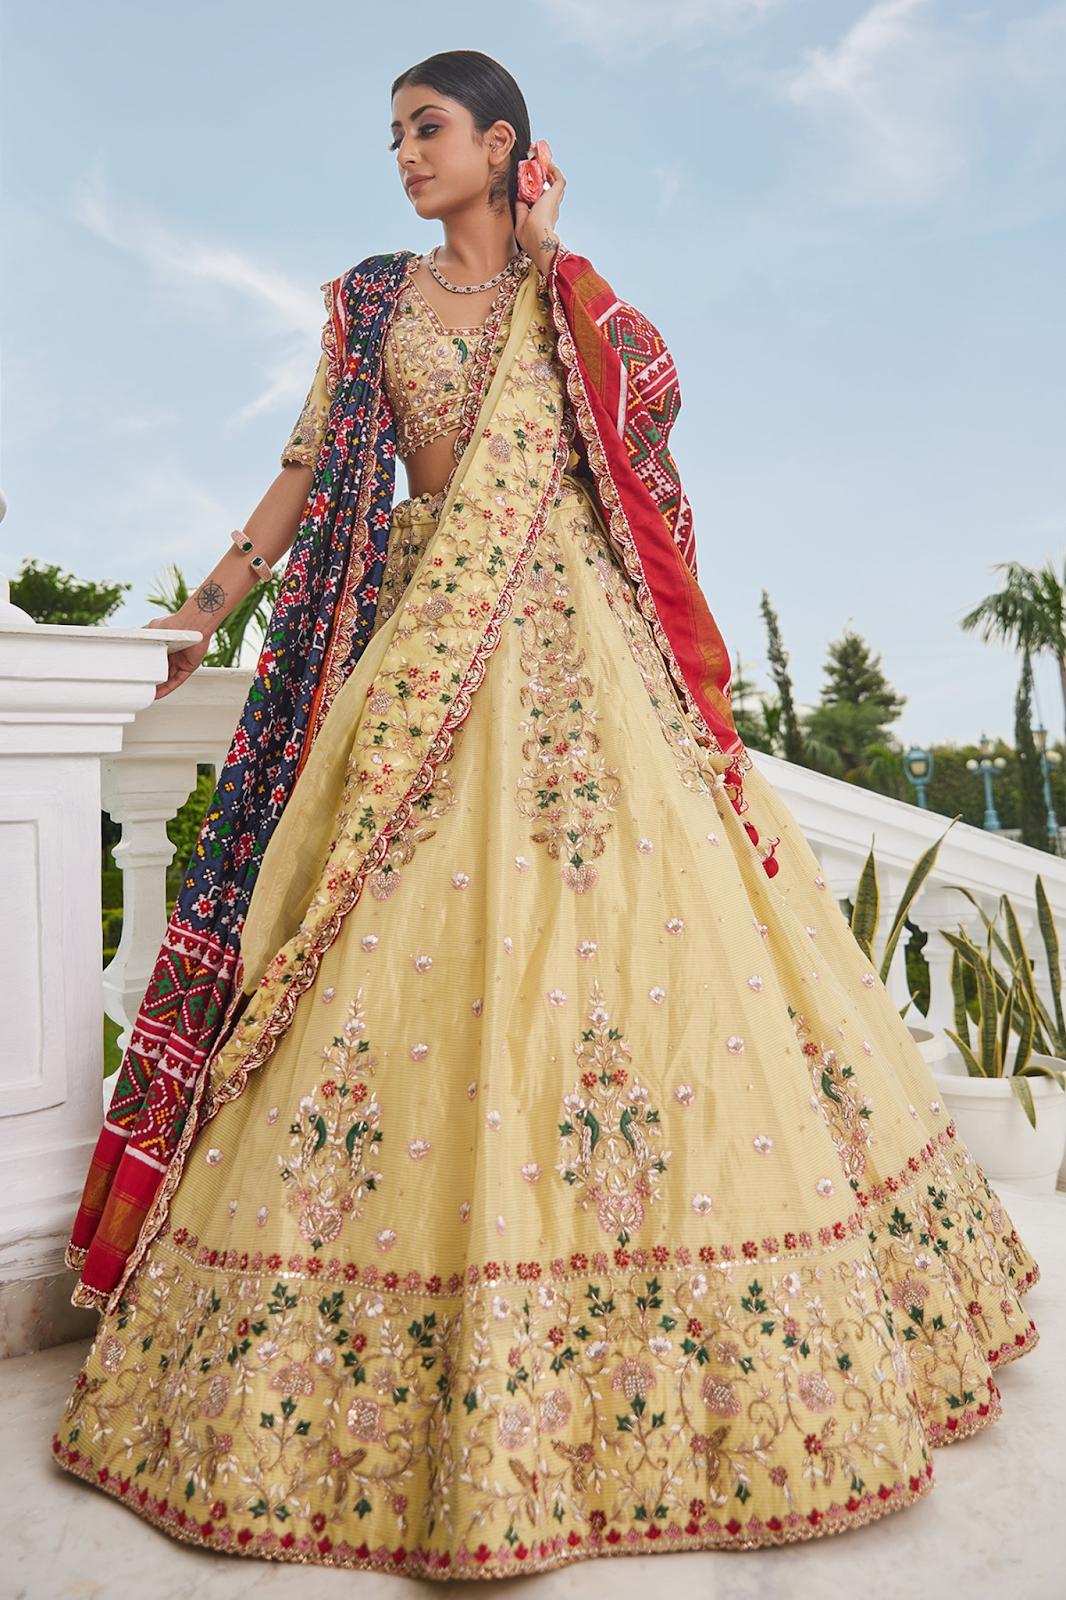 Stunning Bridal Lehenga Choli Designs that are Changing Trends |  Fashionisers©